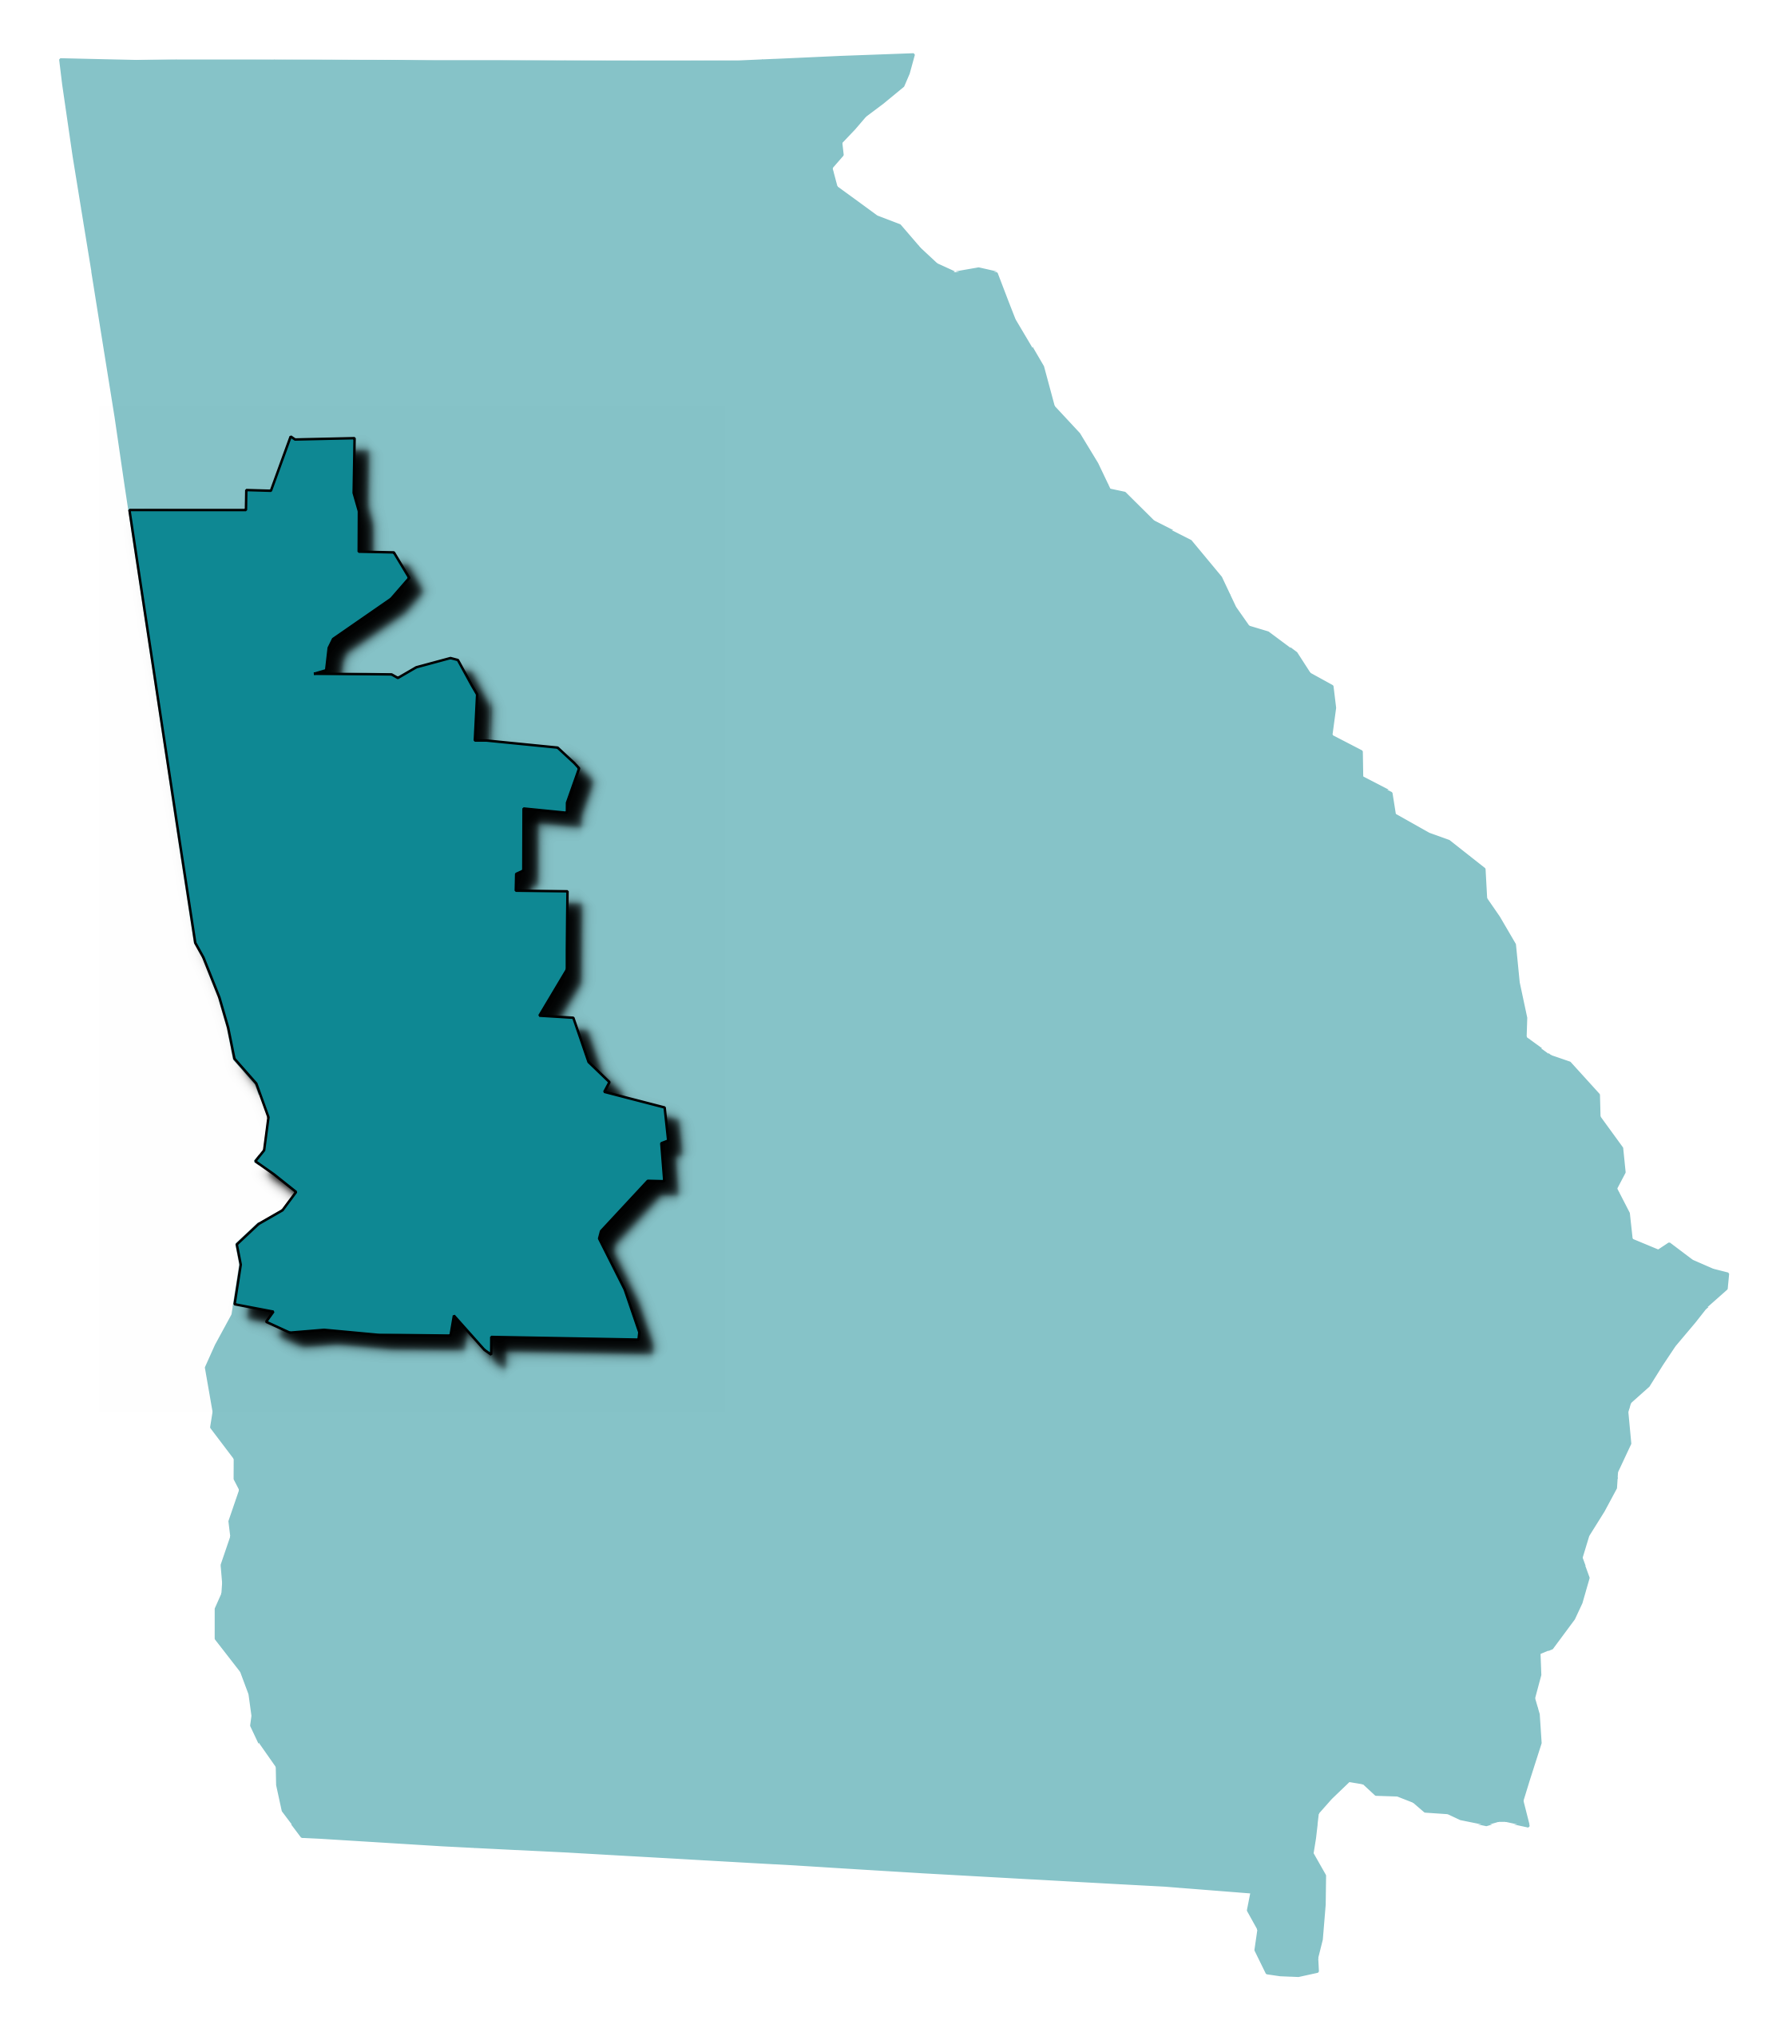 West Georgia region map